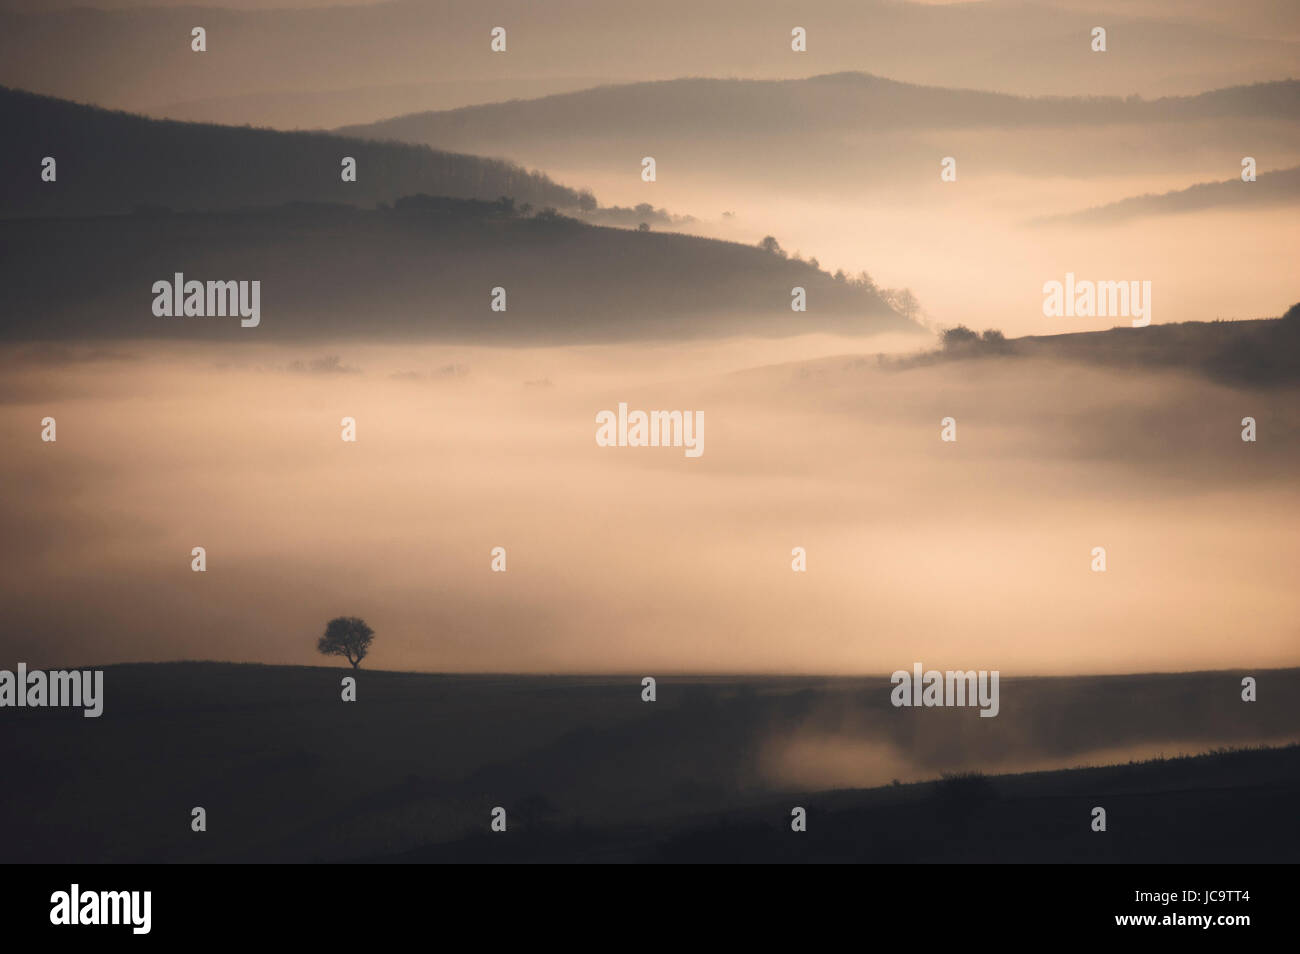 tree on hill in misty morning landscape Stock Photo